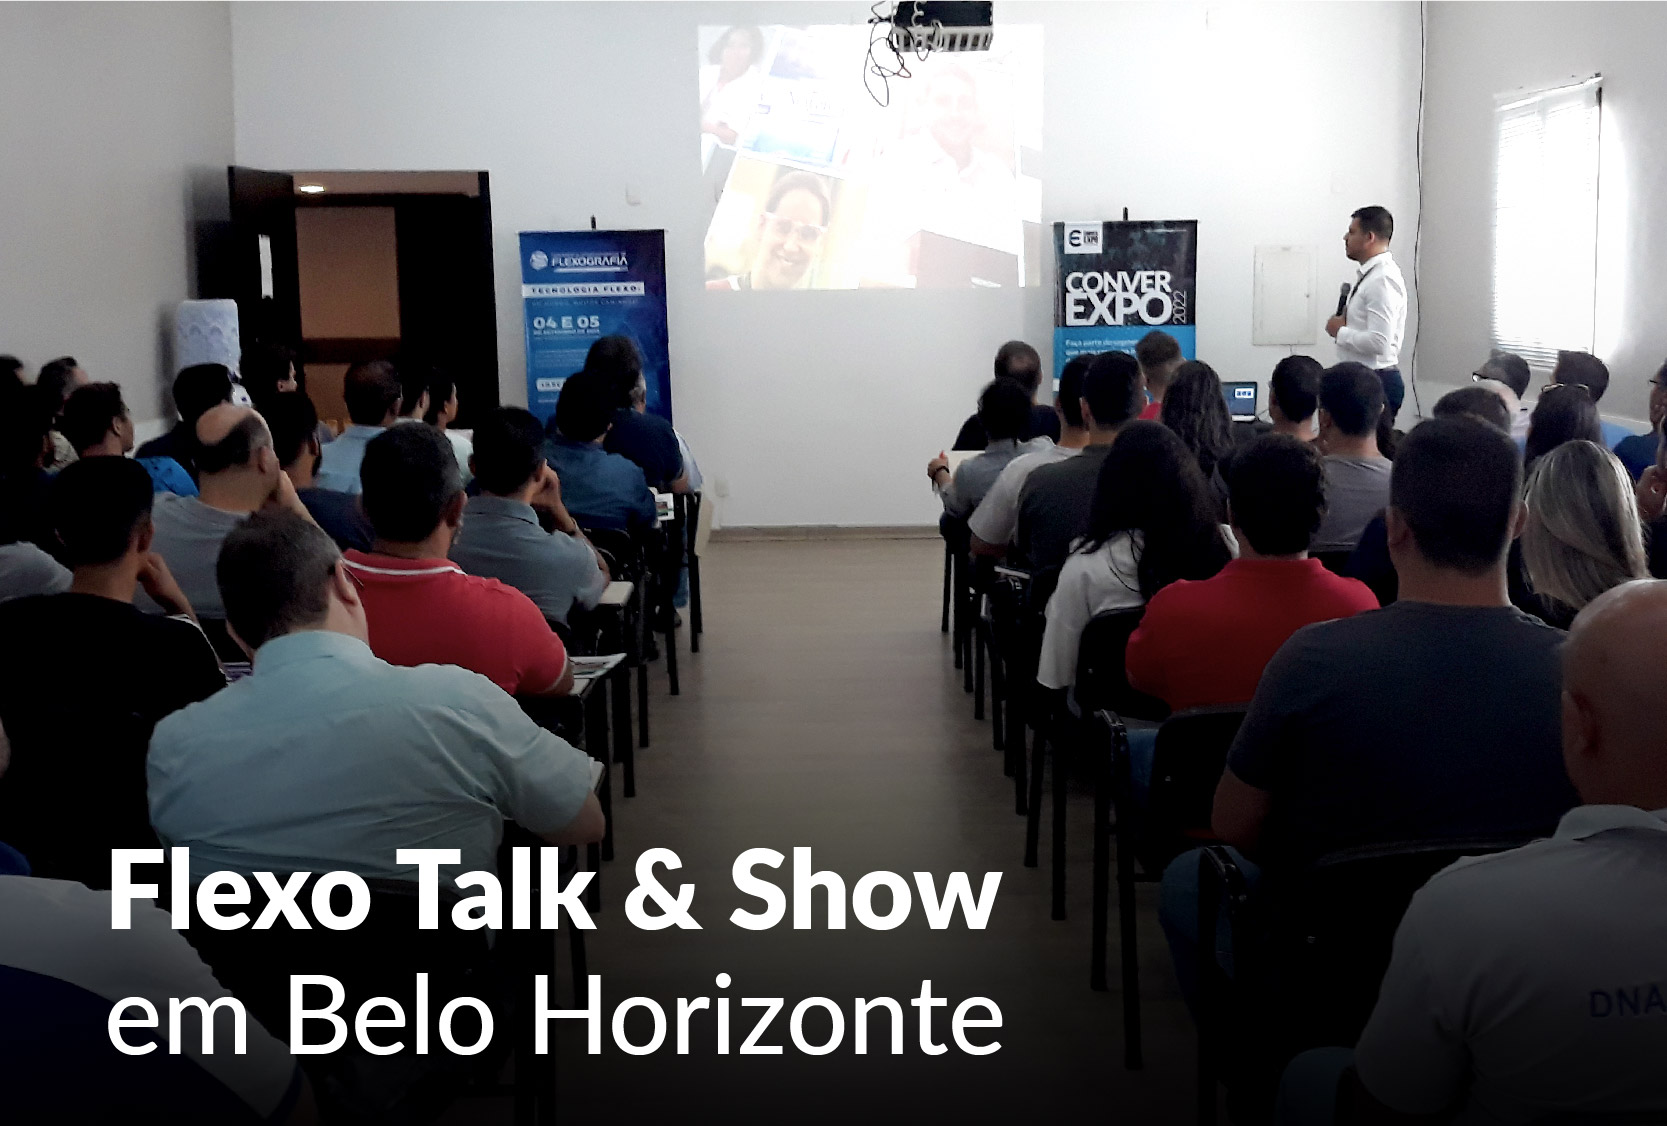 Flexo Talk & Show chega a Belo Horizonte